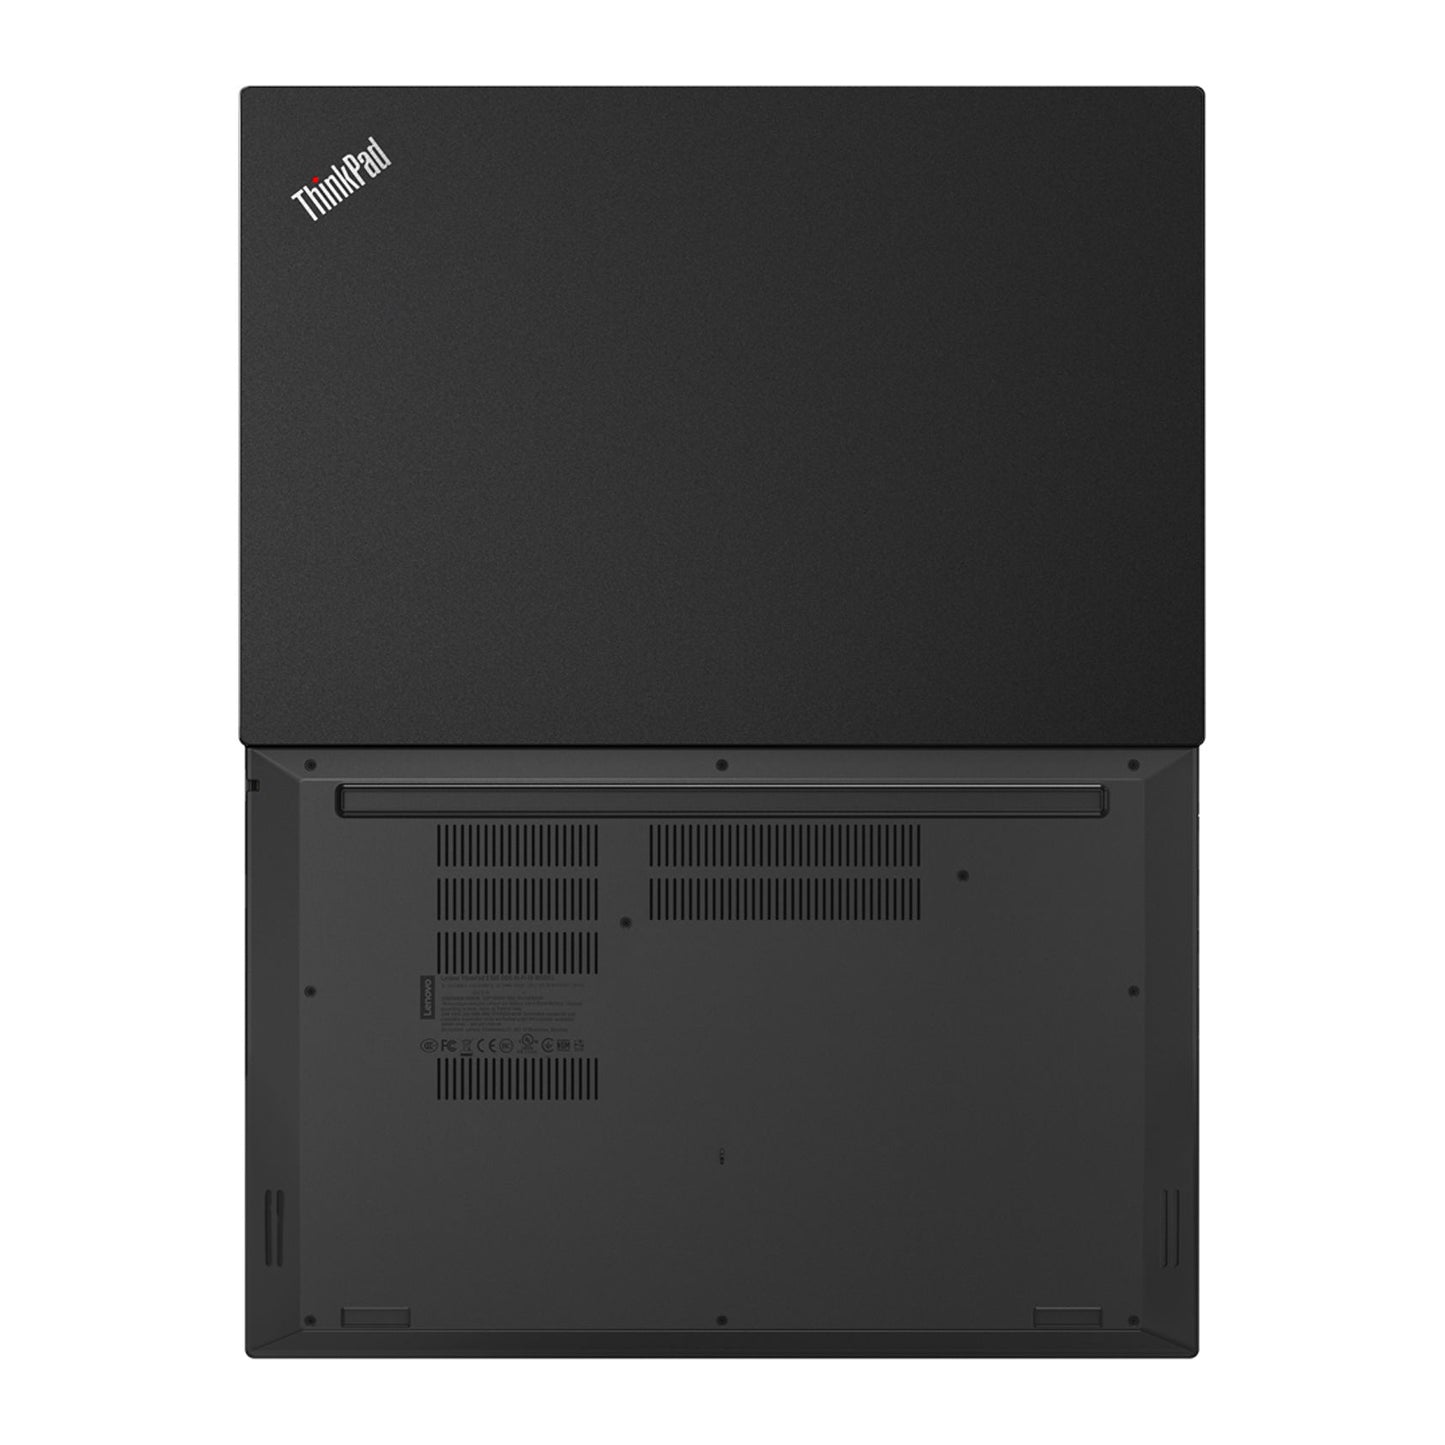 Lenovo Thinkpad E580 Core i5-8250u 15.6" Laptop Offers (Open Box)